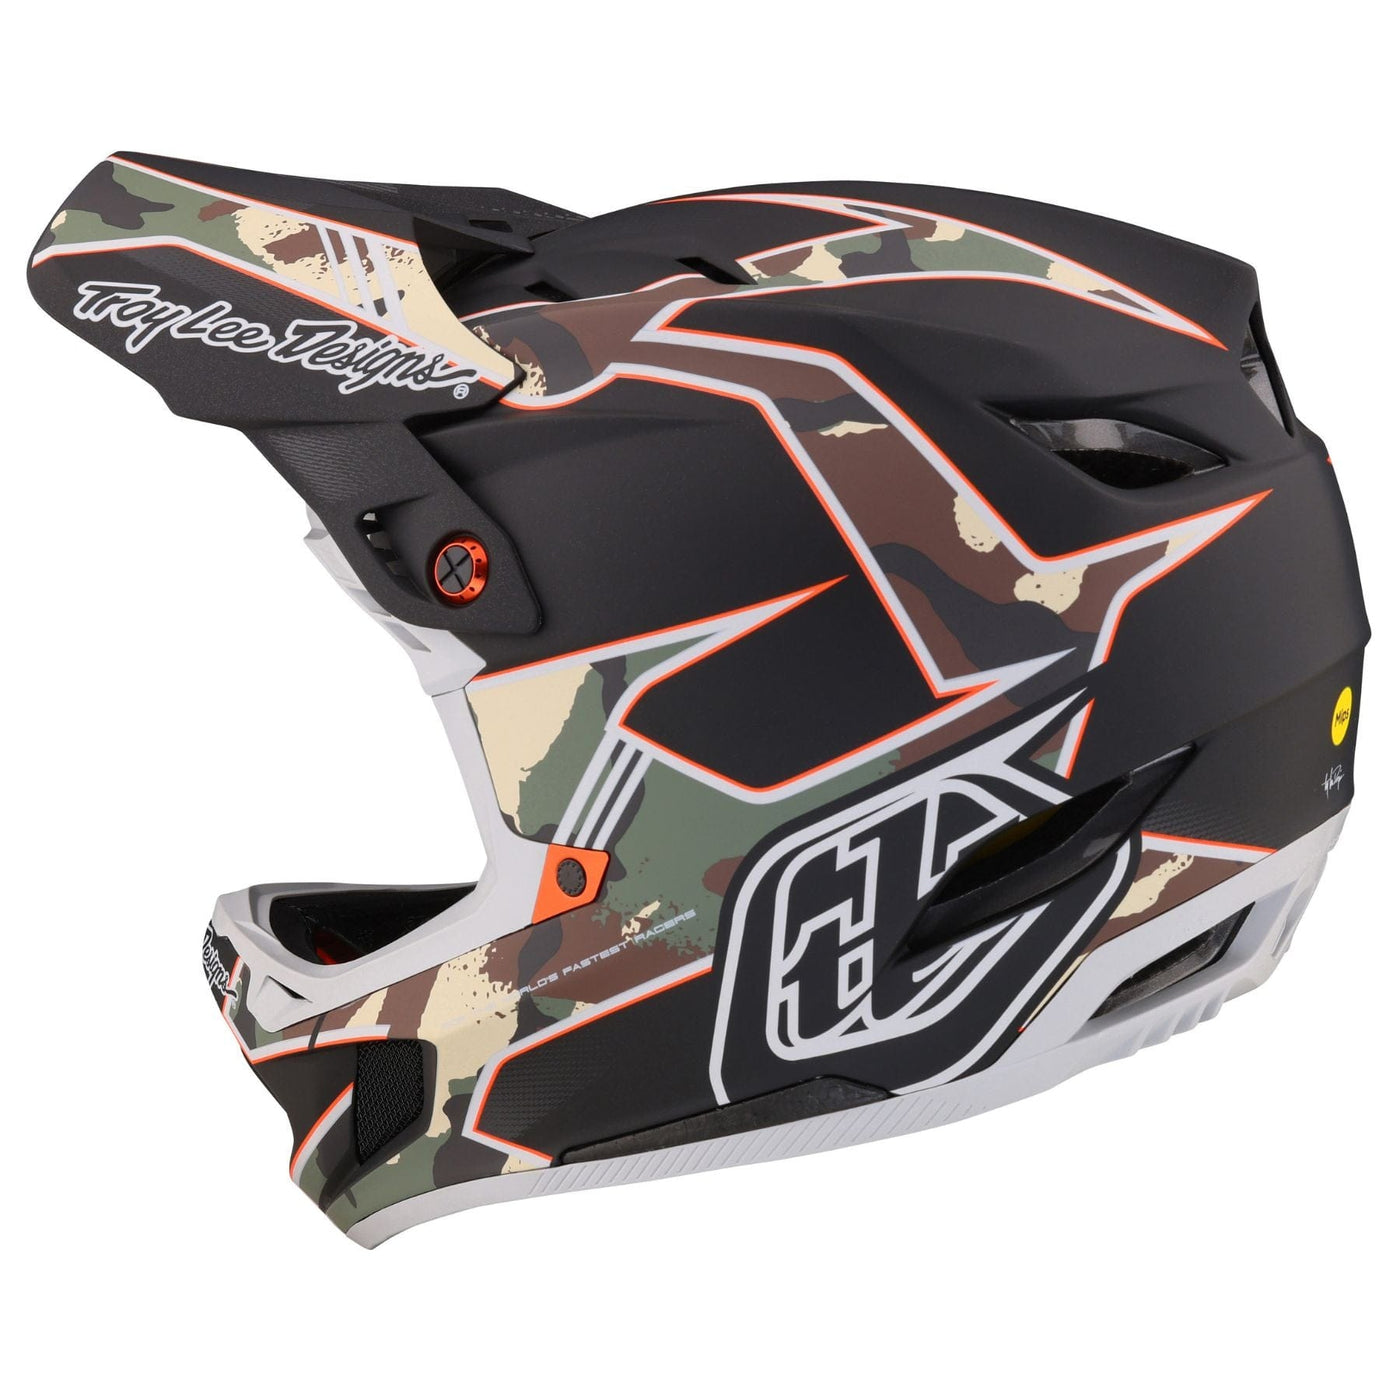 TLD D4 Composite MIPS Helmet Matrix - Camo Army Green 8Lines Shop - Fast Shipping